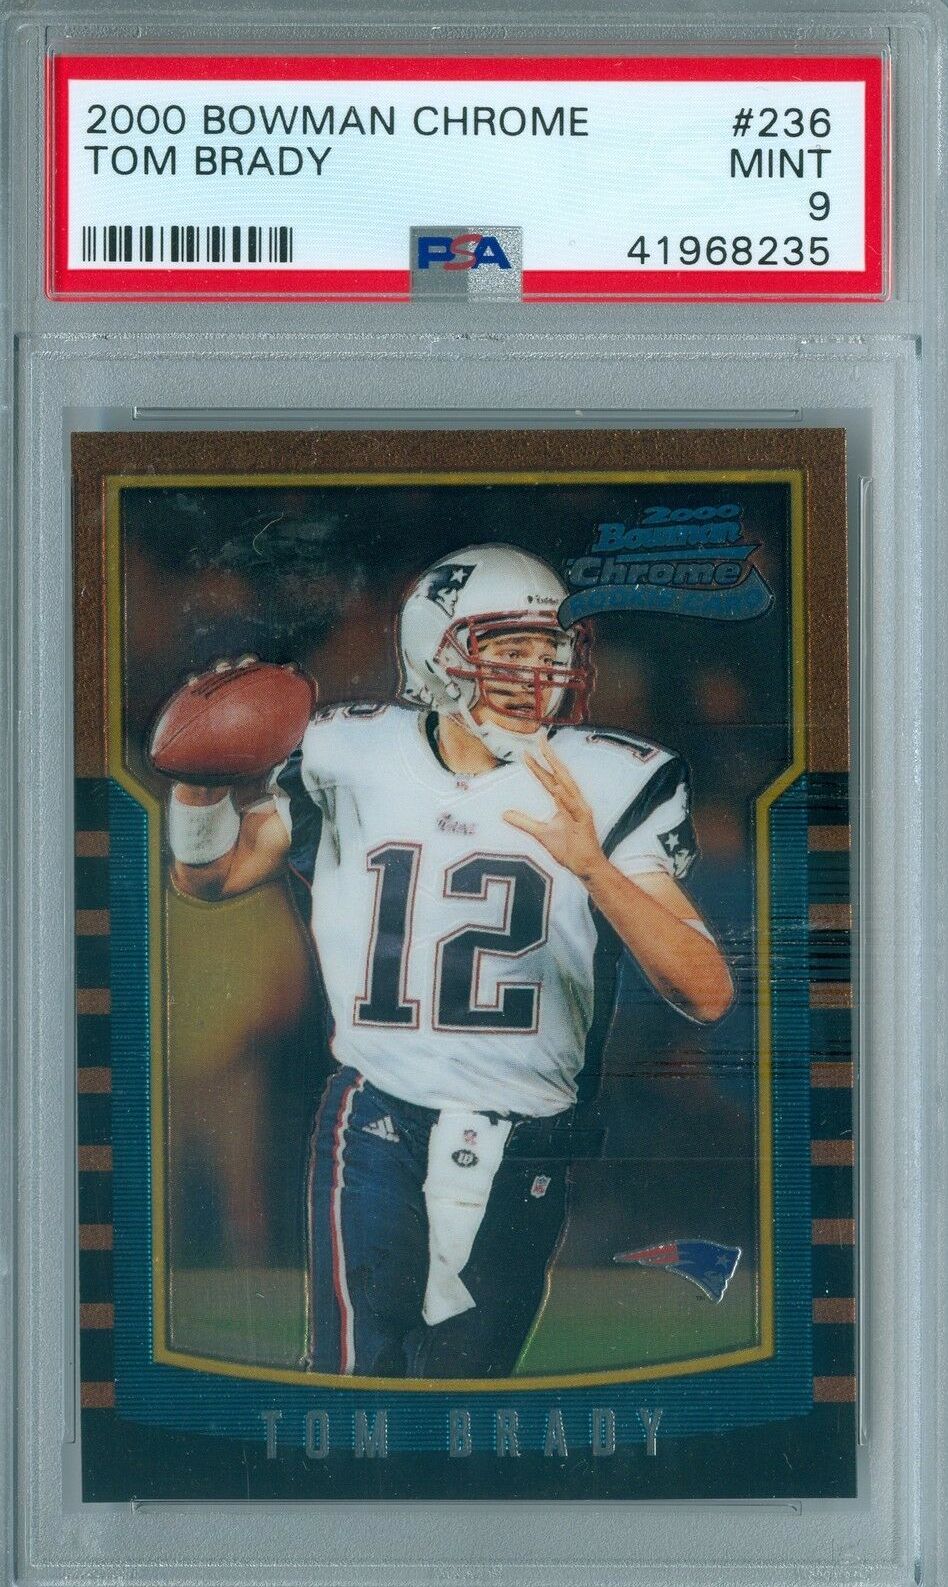 Image of 2000 Bowman Chrome Tom Brady sports trading card